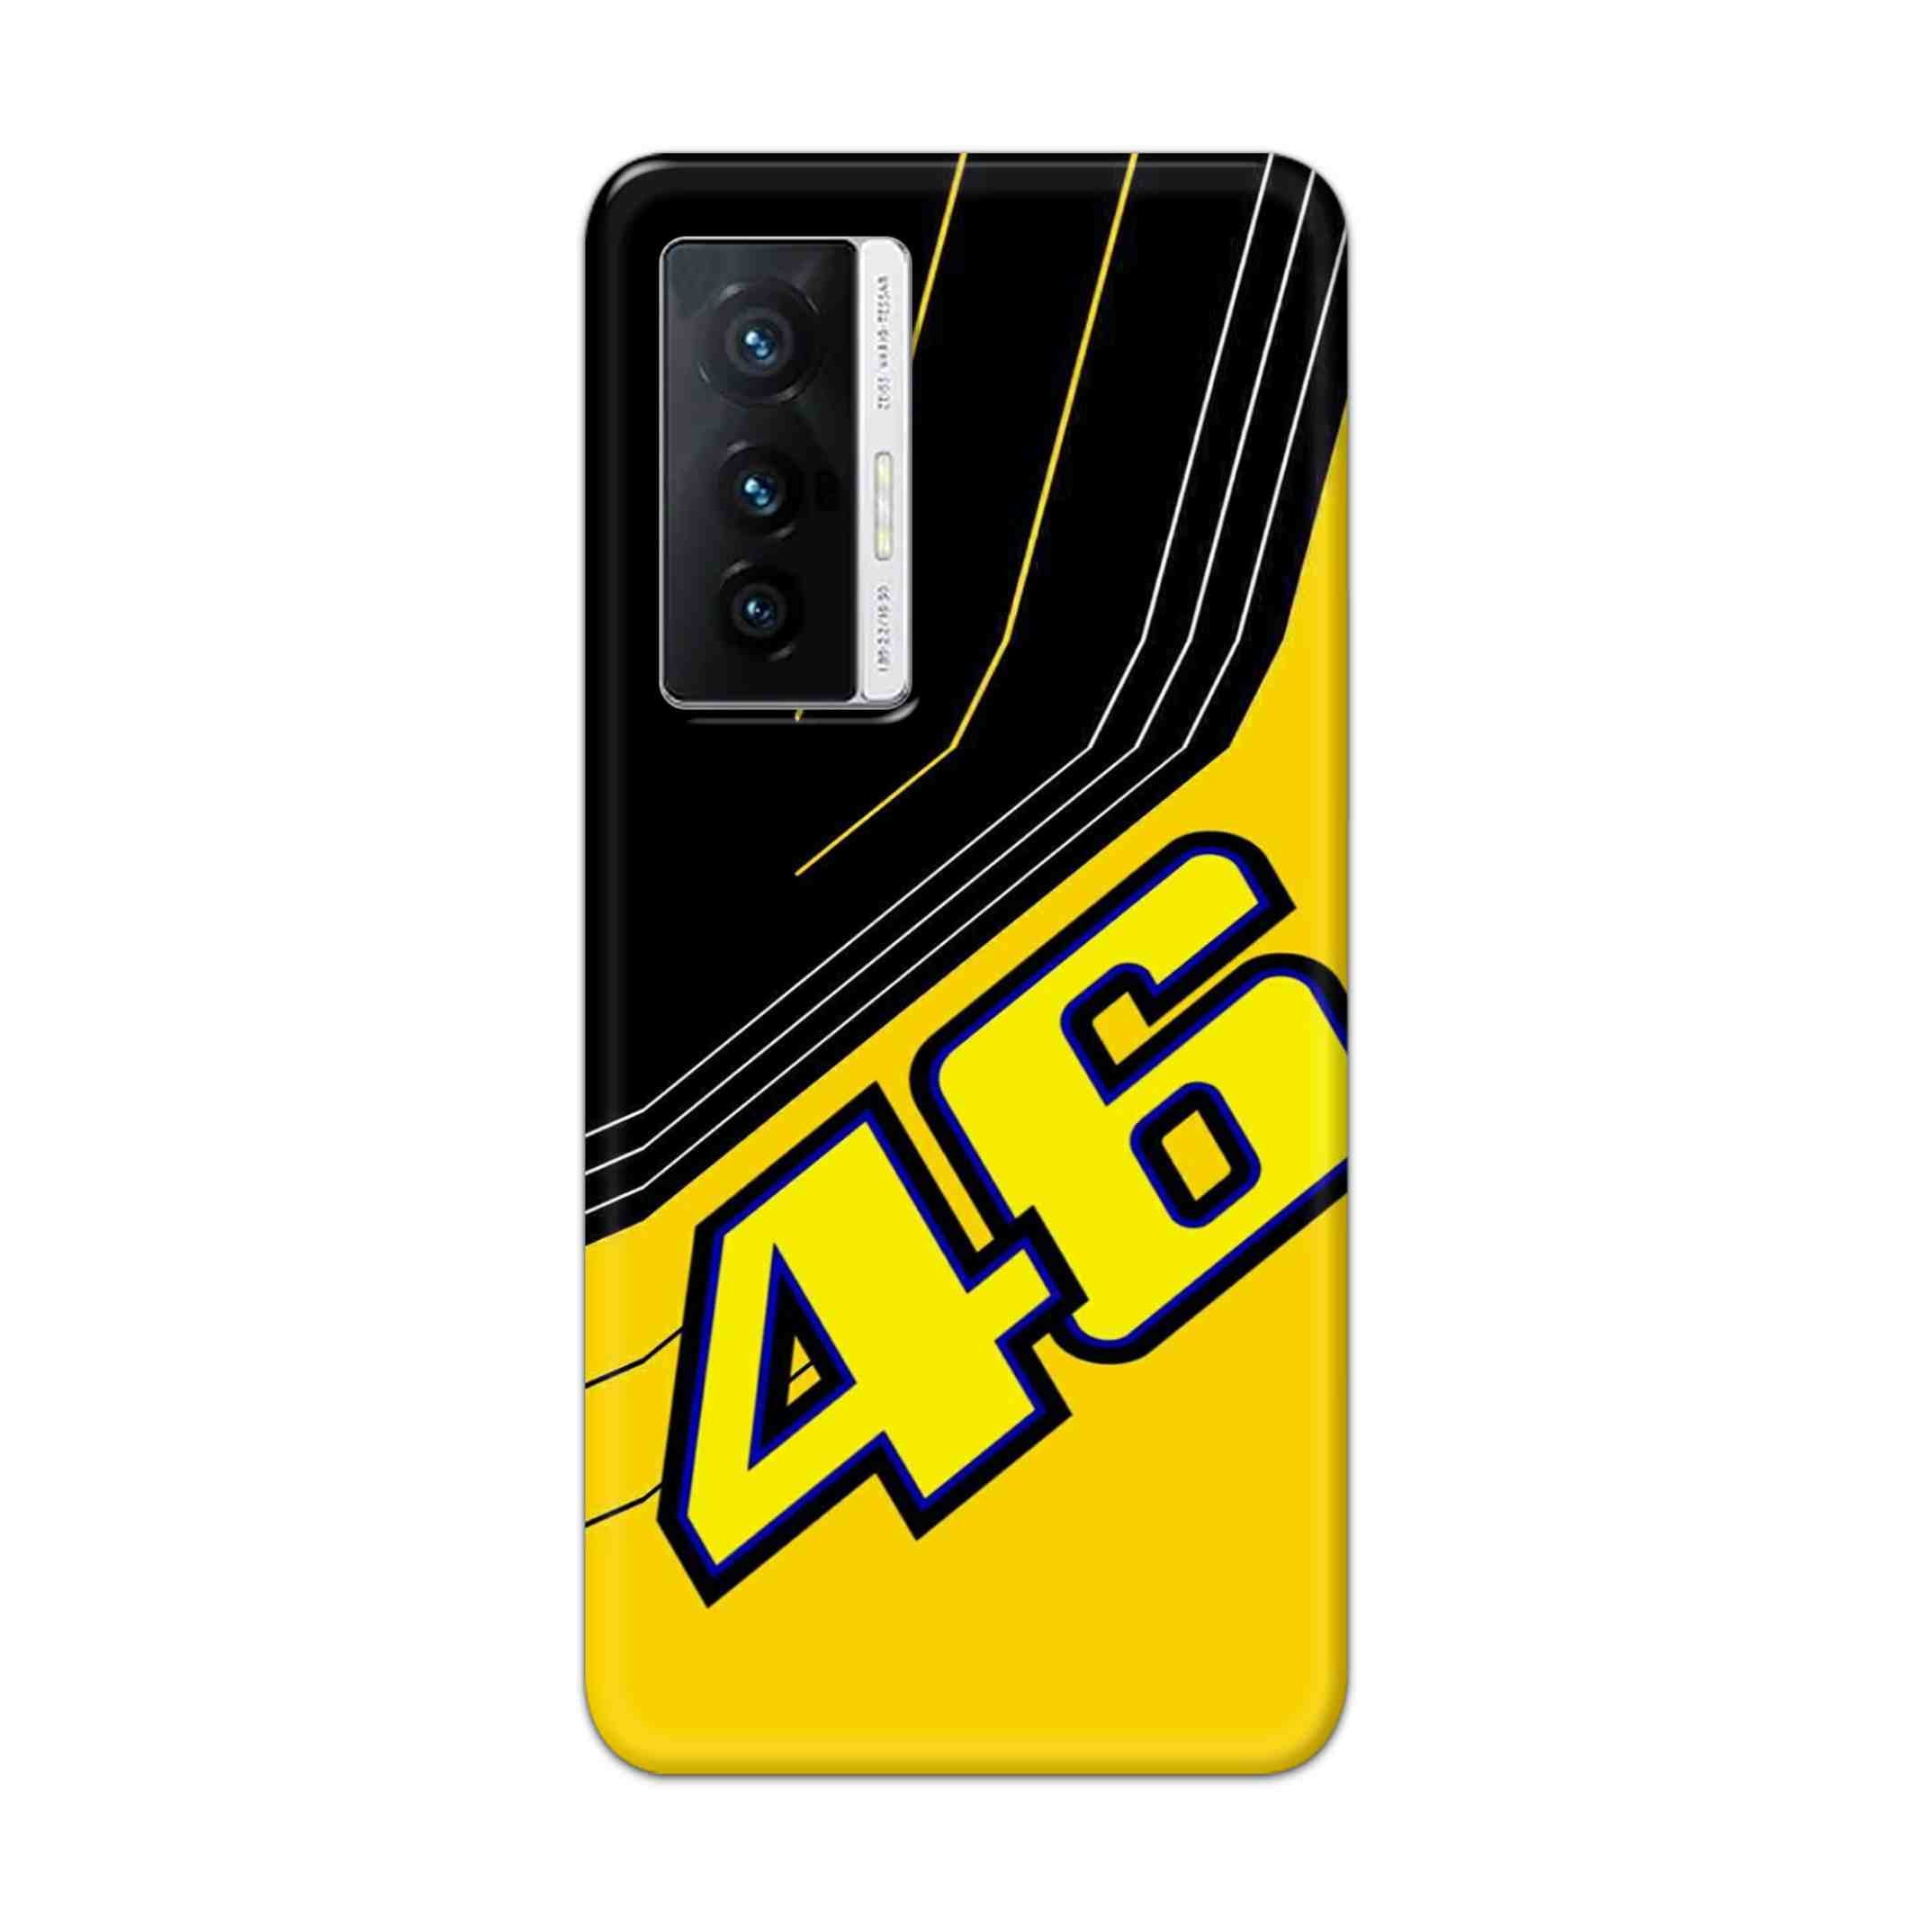 Buy 46 Hard Back Mobile Phone Case Cover For Vivo X70 Online